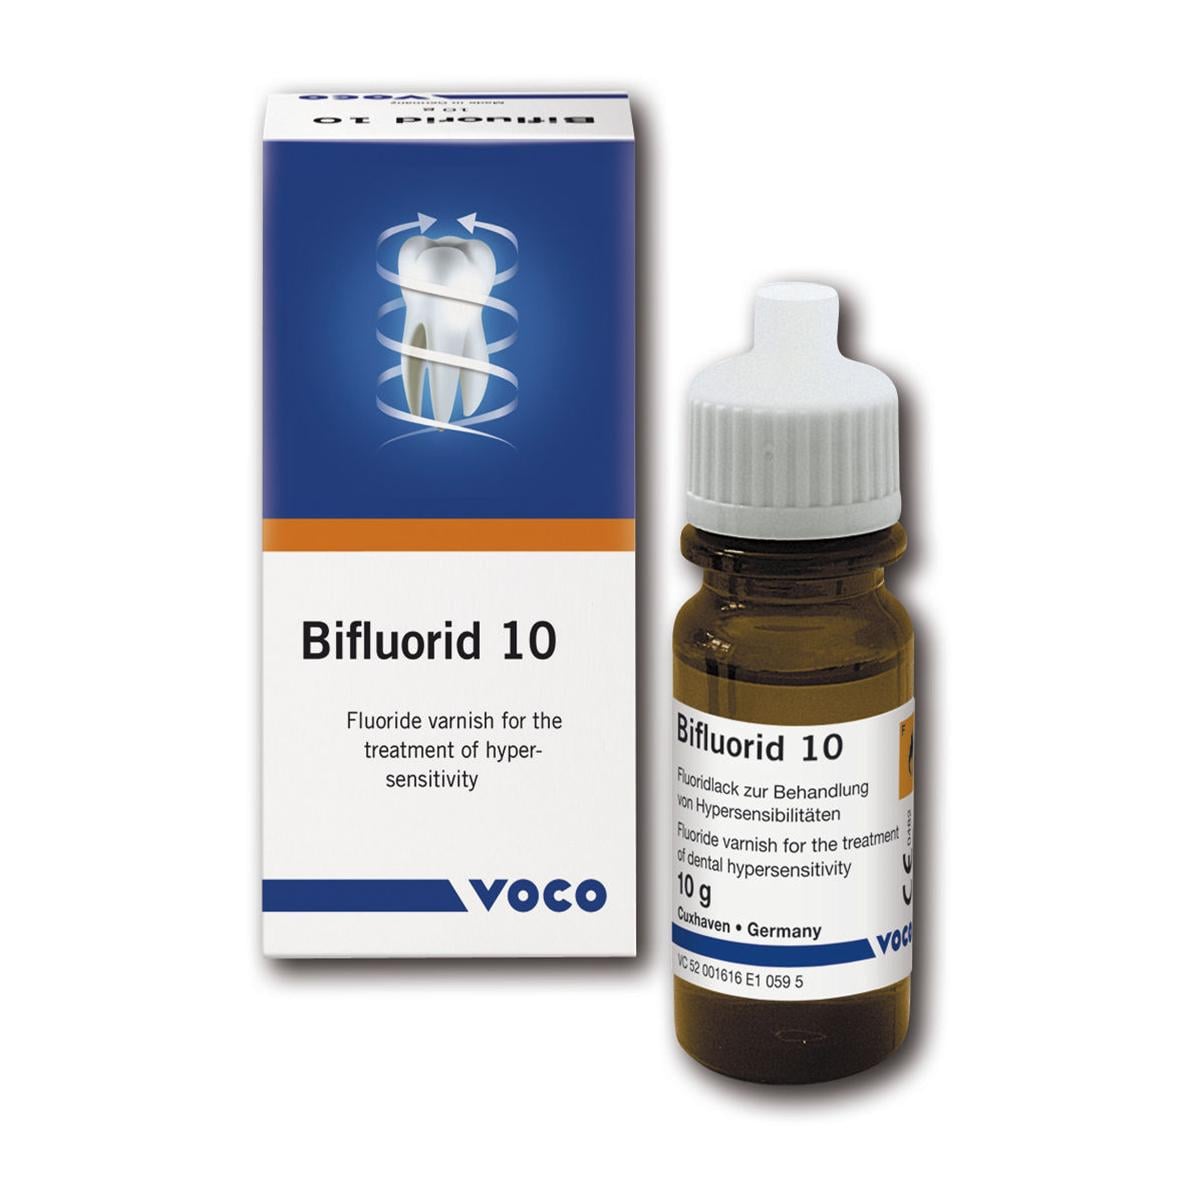 Bifluorid 10 - Single dose, 50 stuks